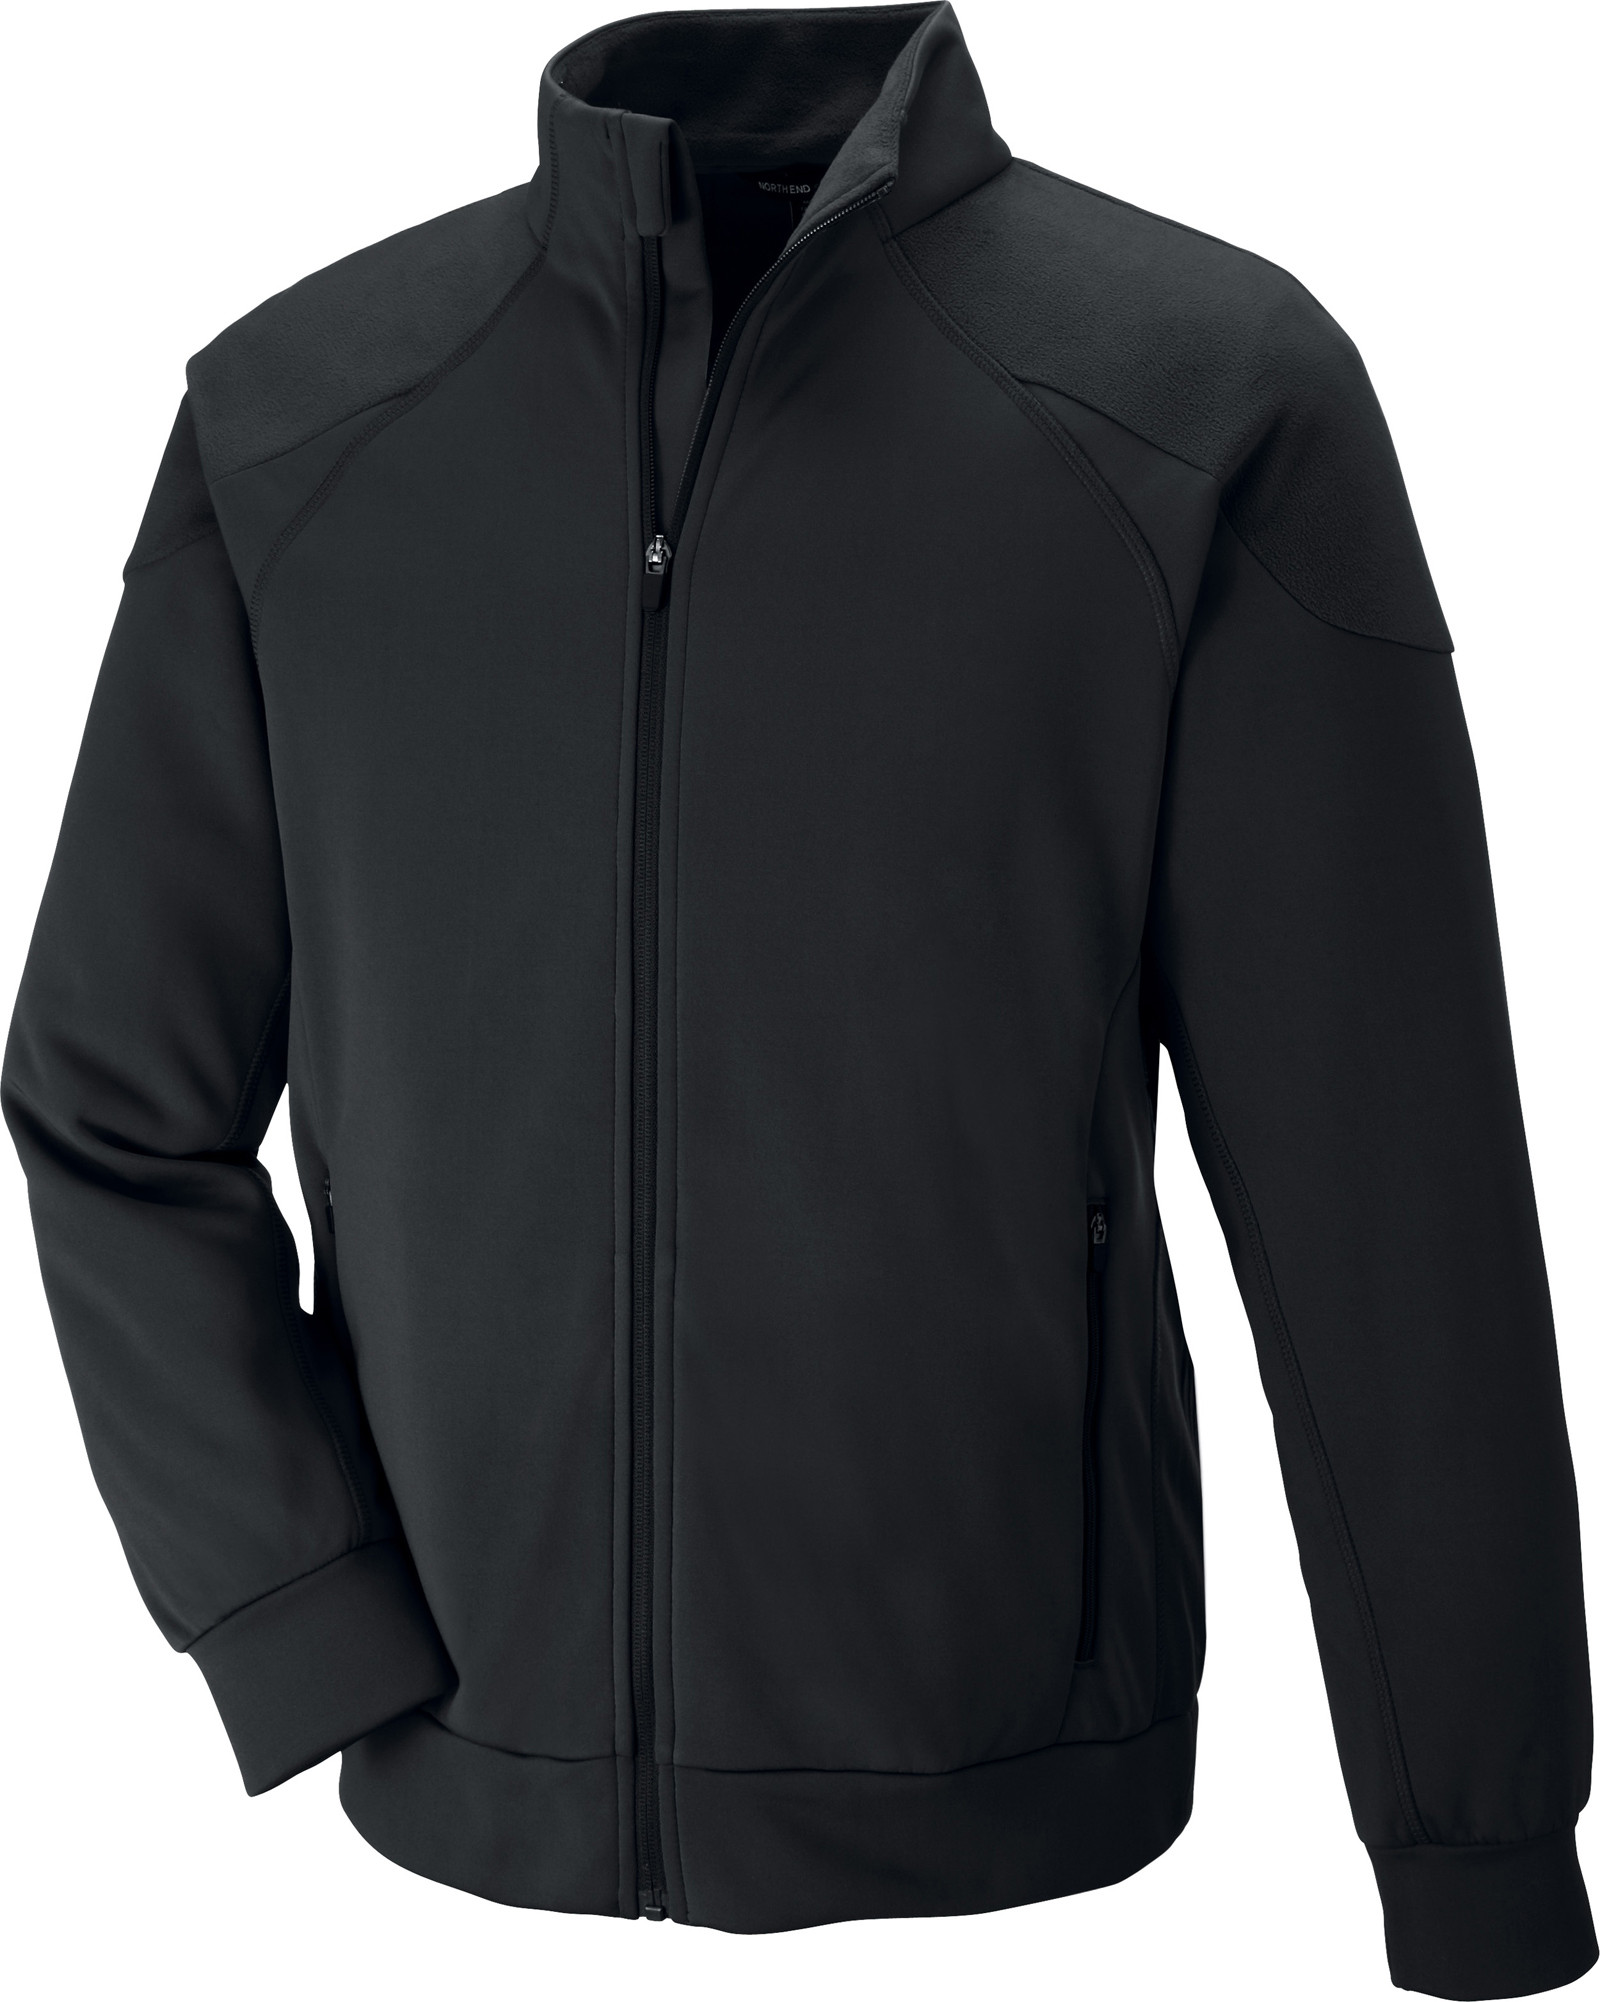 Ash City Bonded Fleece 88660 - Evoke Men's Bonded Fleece Jacket $41.81